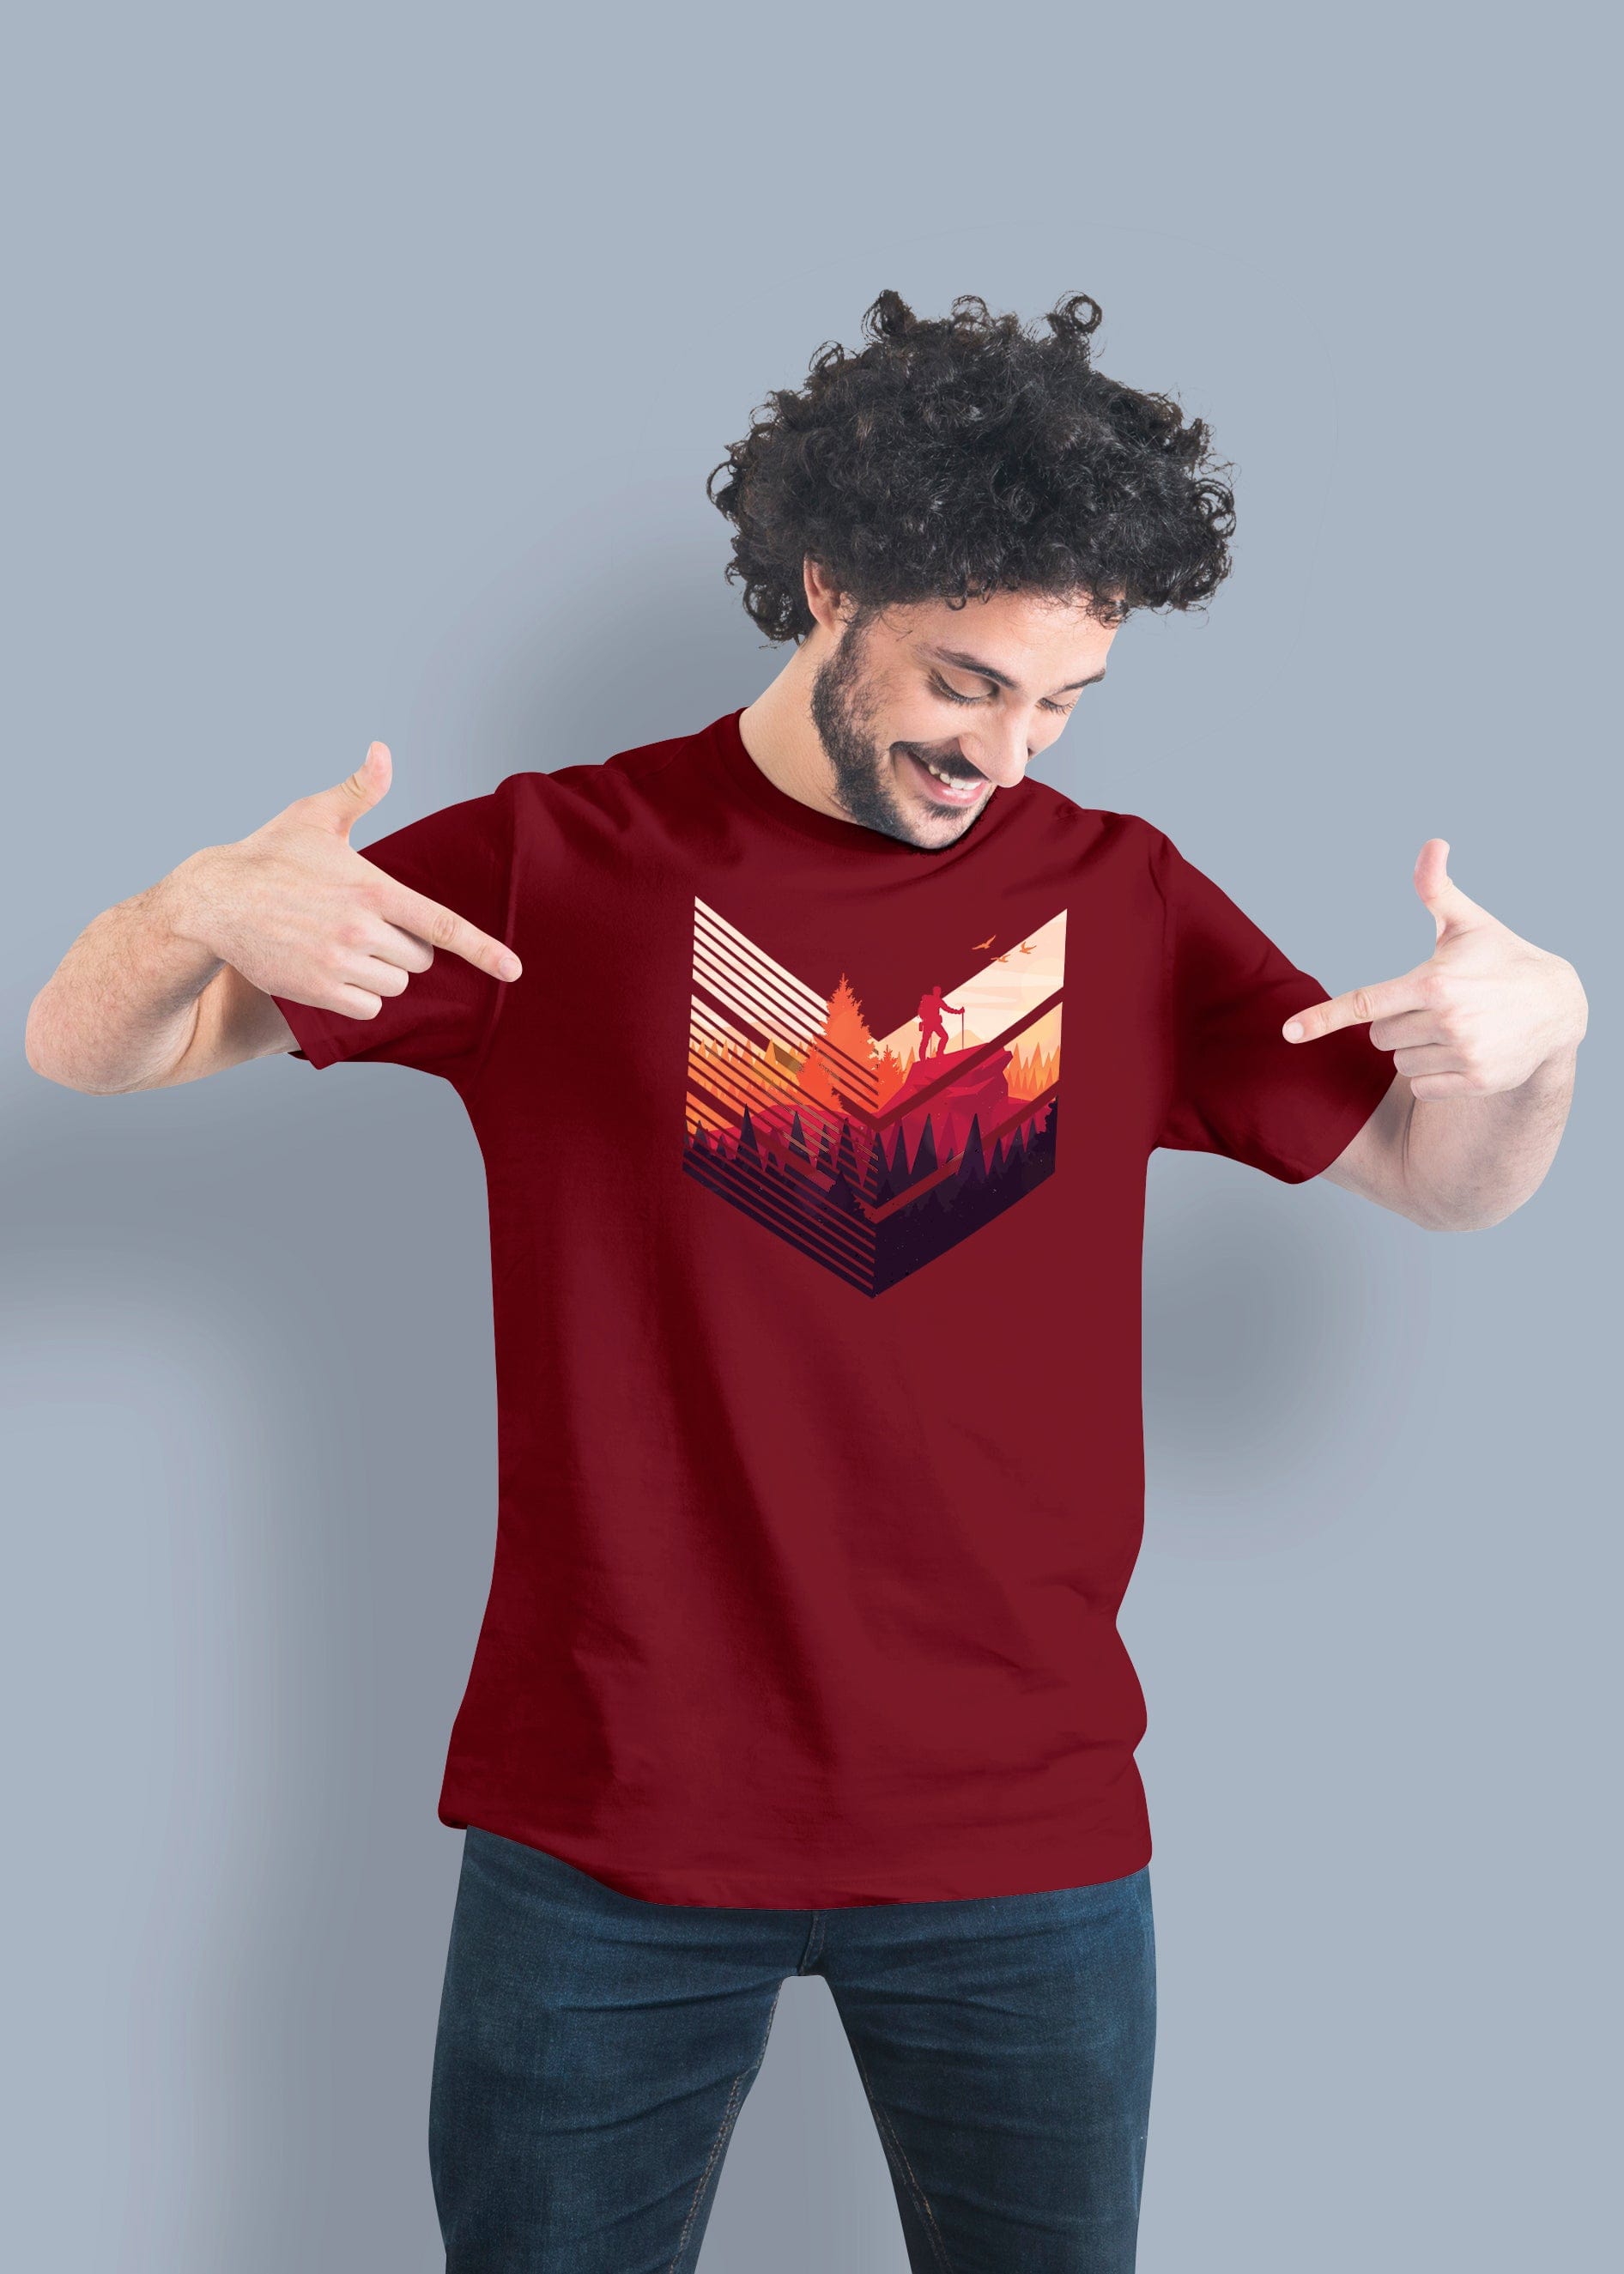 Arrow Forest Printed Half Sleeve Premium Cotton T-shirt For Men